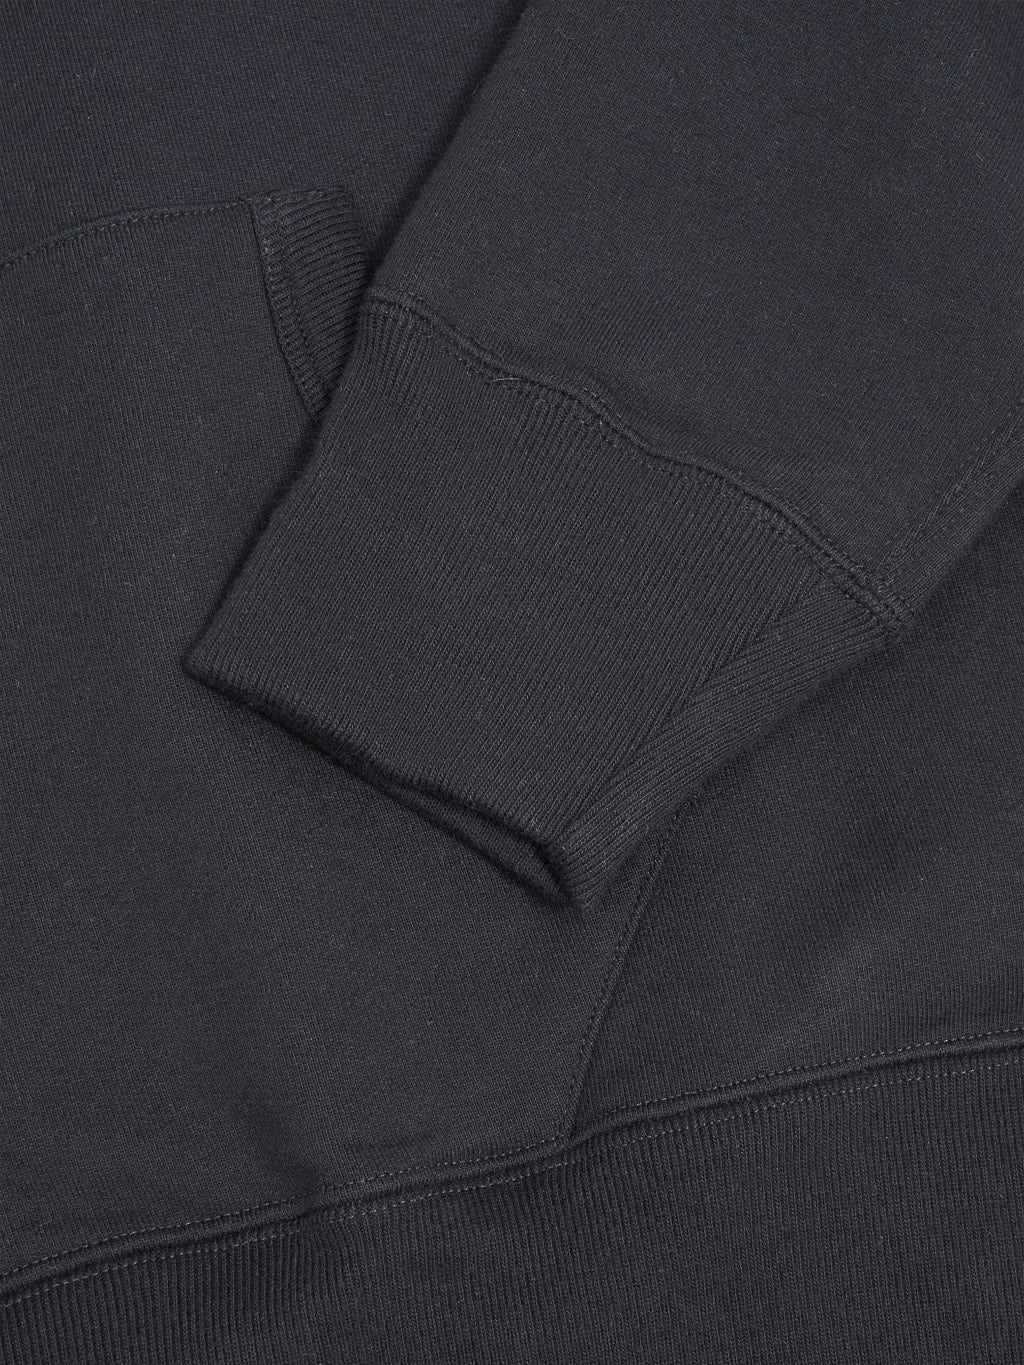 Merz b schwanen loopwheeled hoodie black elastic cuff